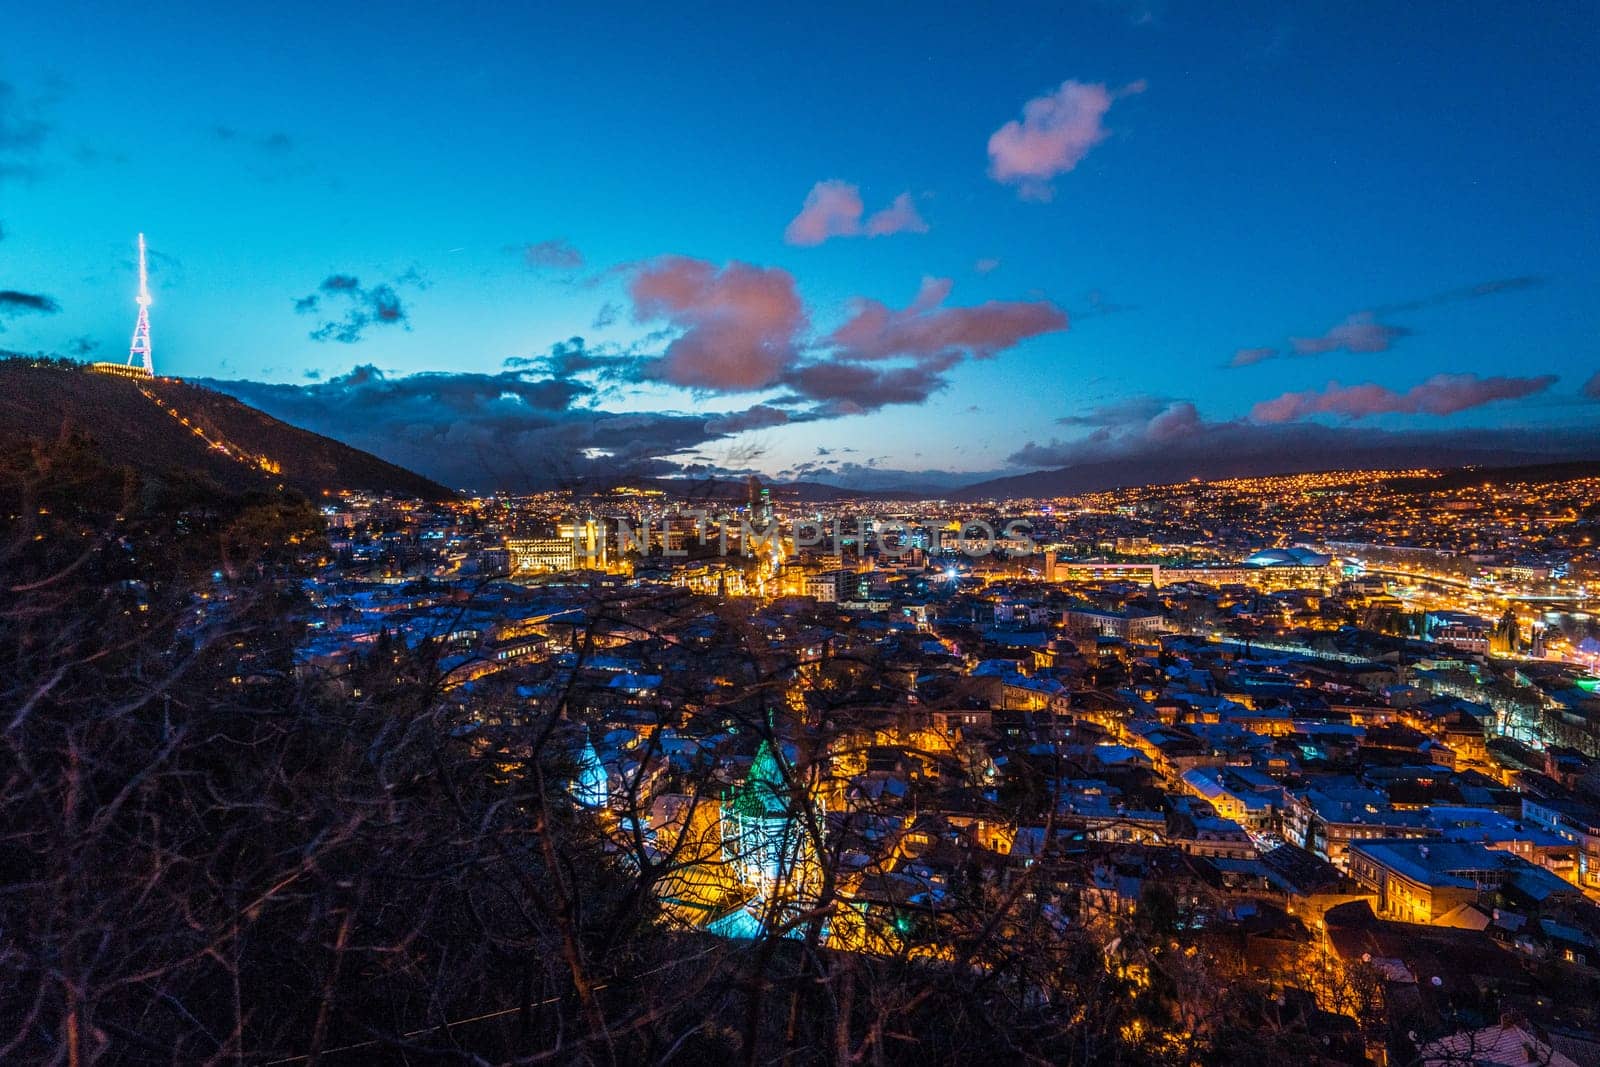 Georgia. Beautiful view of illuminated Tbilisi at night